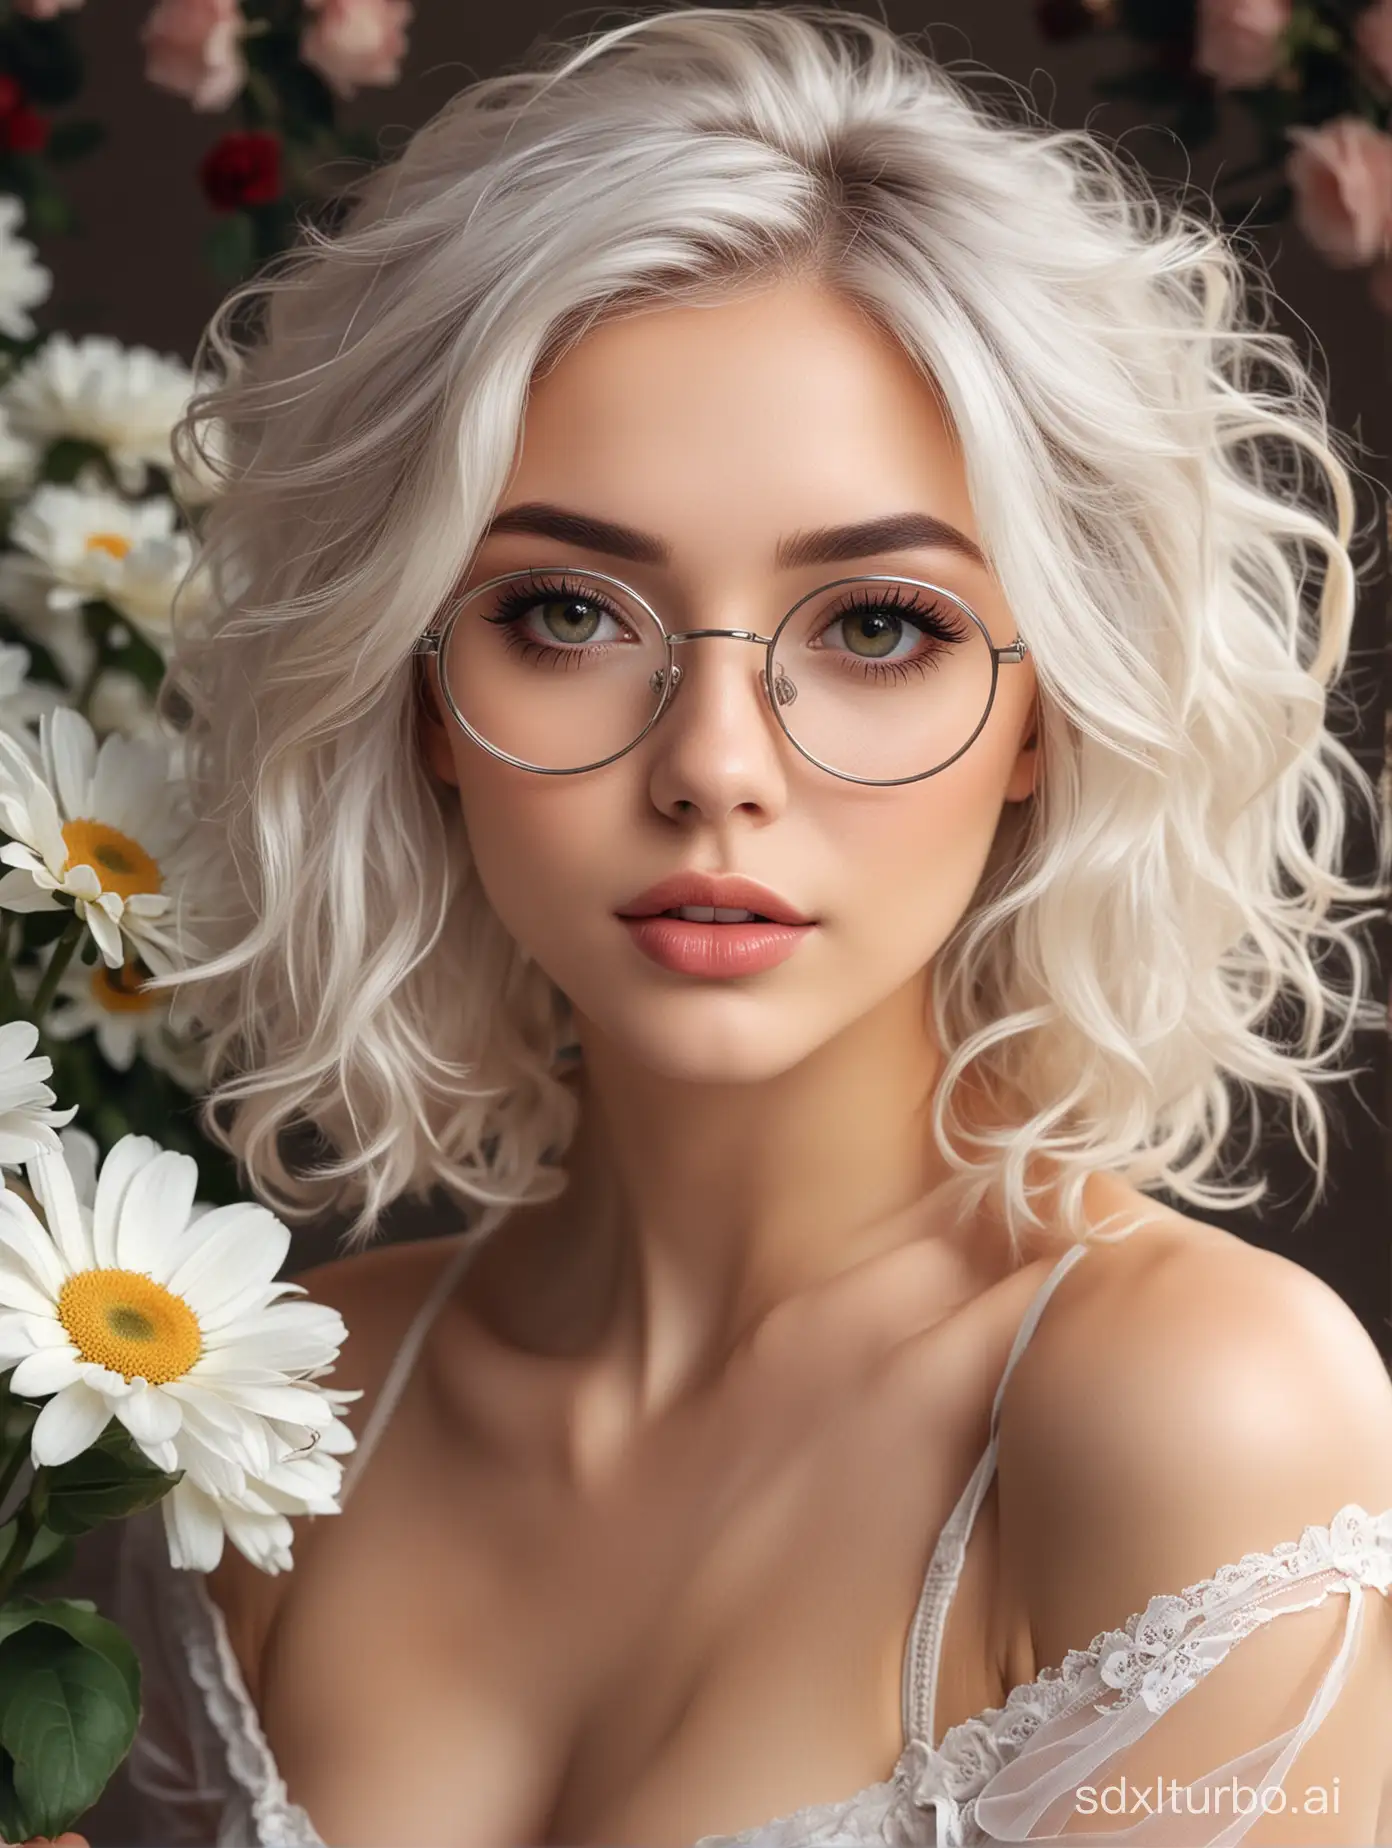 Nude Seductive white Haired girl, Delicate Makeup, Alluring Pose, circular eyeglasses, wavy hair, 4k, nylons, short hair, flowers